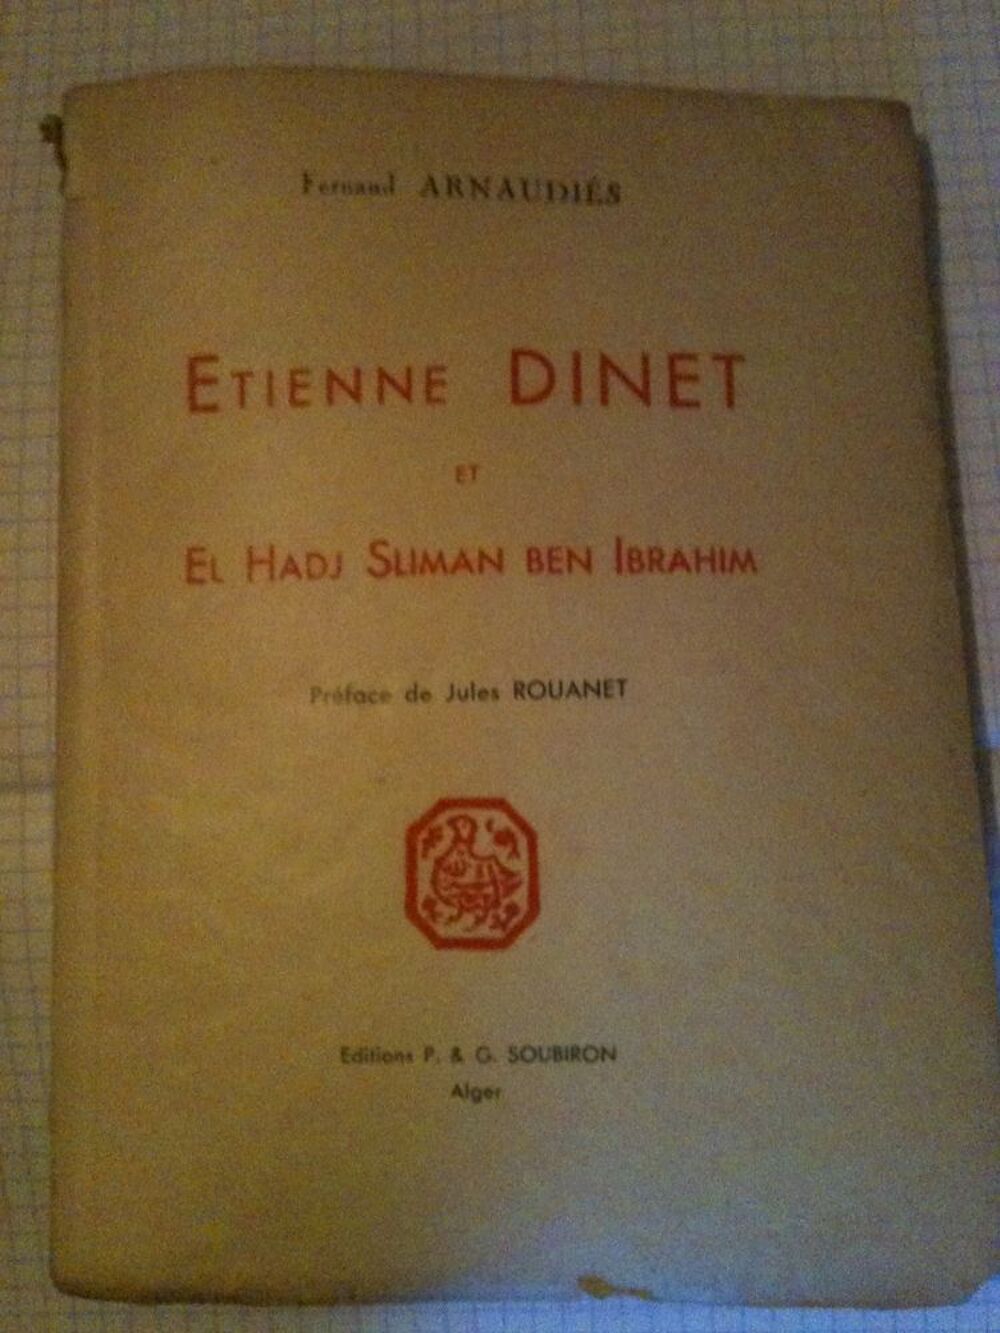 ARNAUDI&Eacute;S Fernand, Etienne Dinet El Hadj Sliman Ben Ibrahim Livres et BD